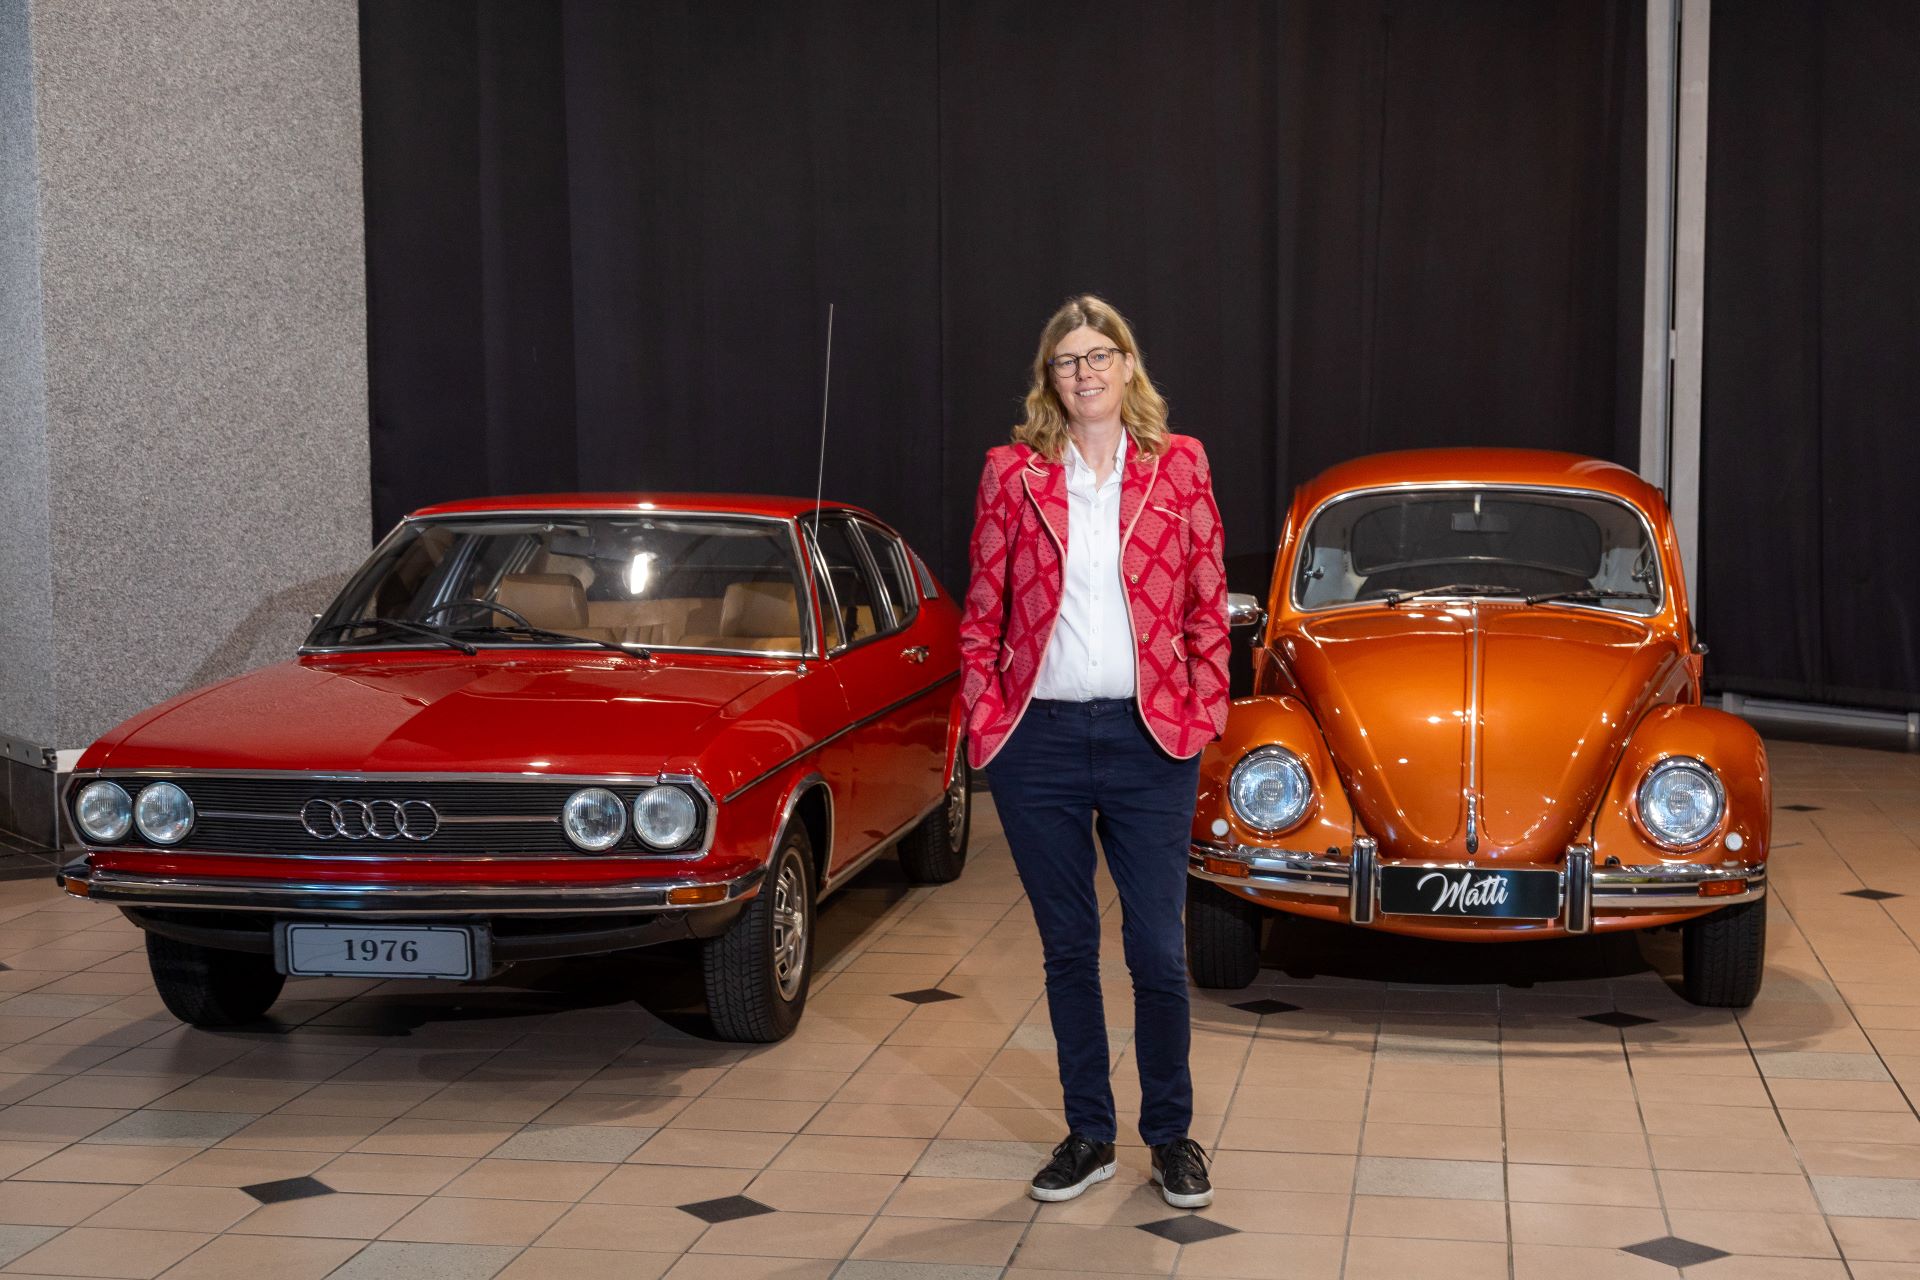 Volkswagen AutoPavilion marks 20 years of celebrating heritage